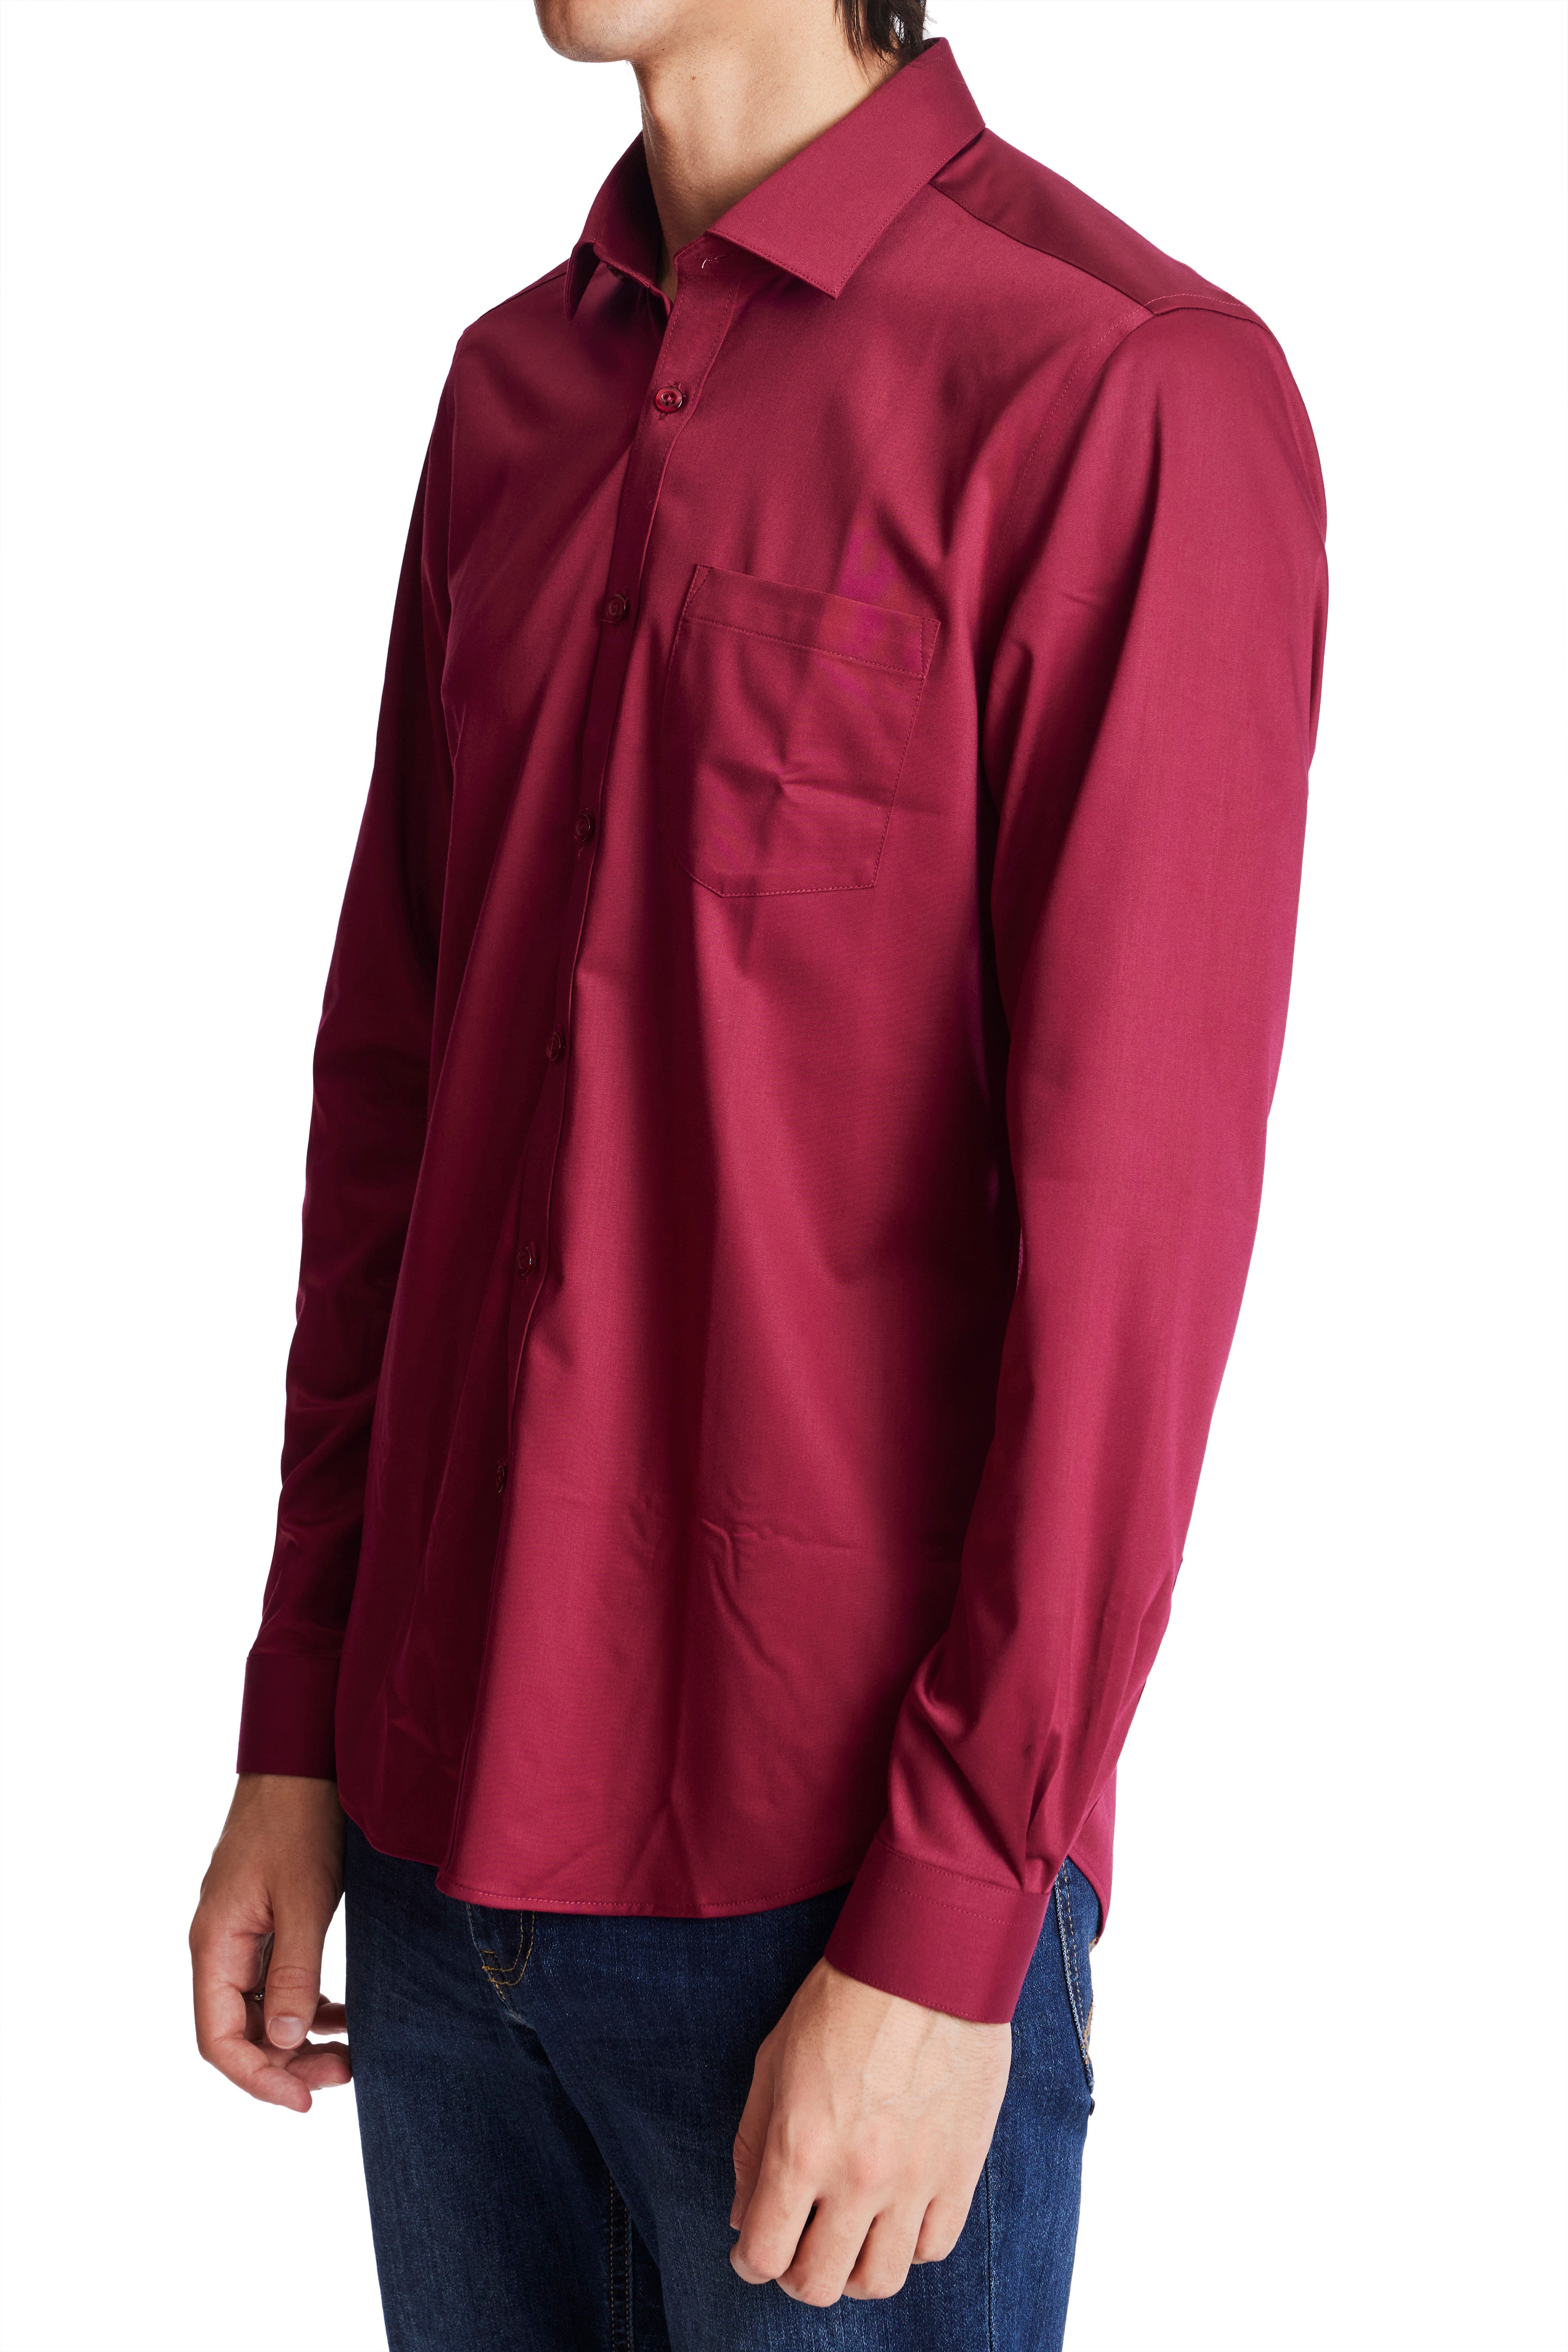 Samuel Spread Collar Shirt - Cranberry